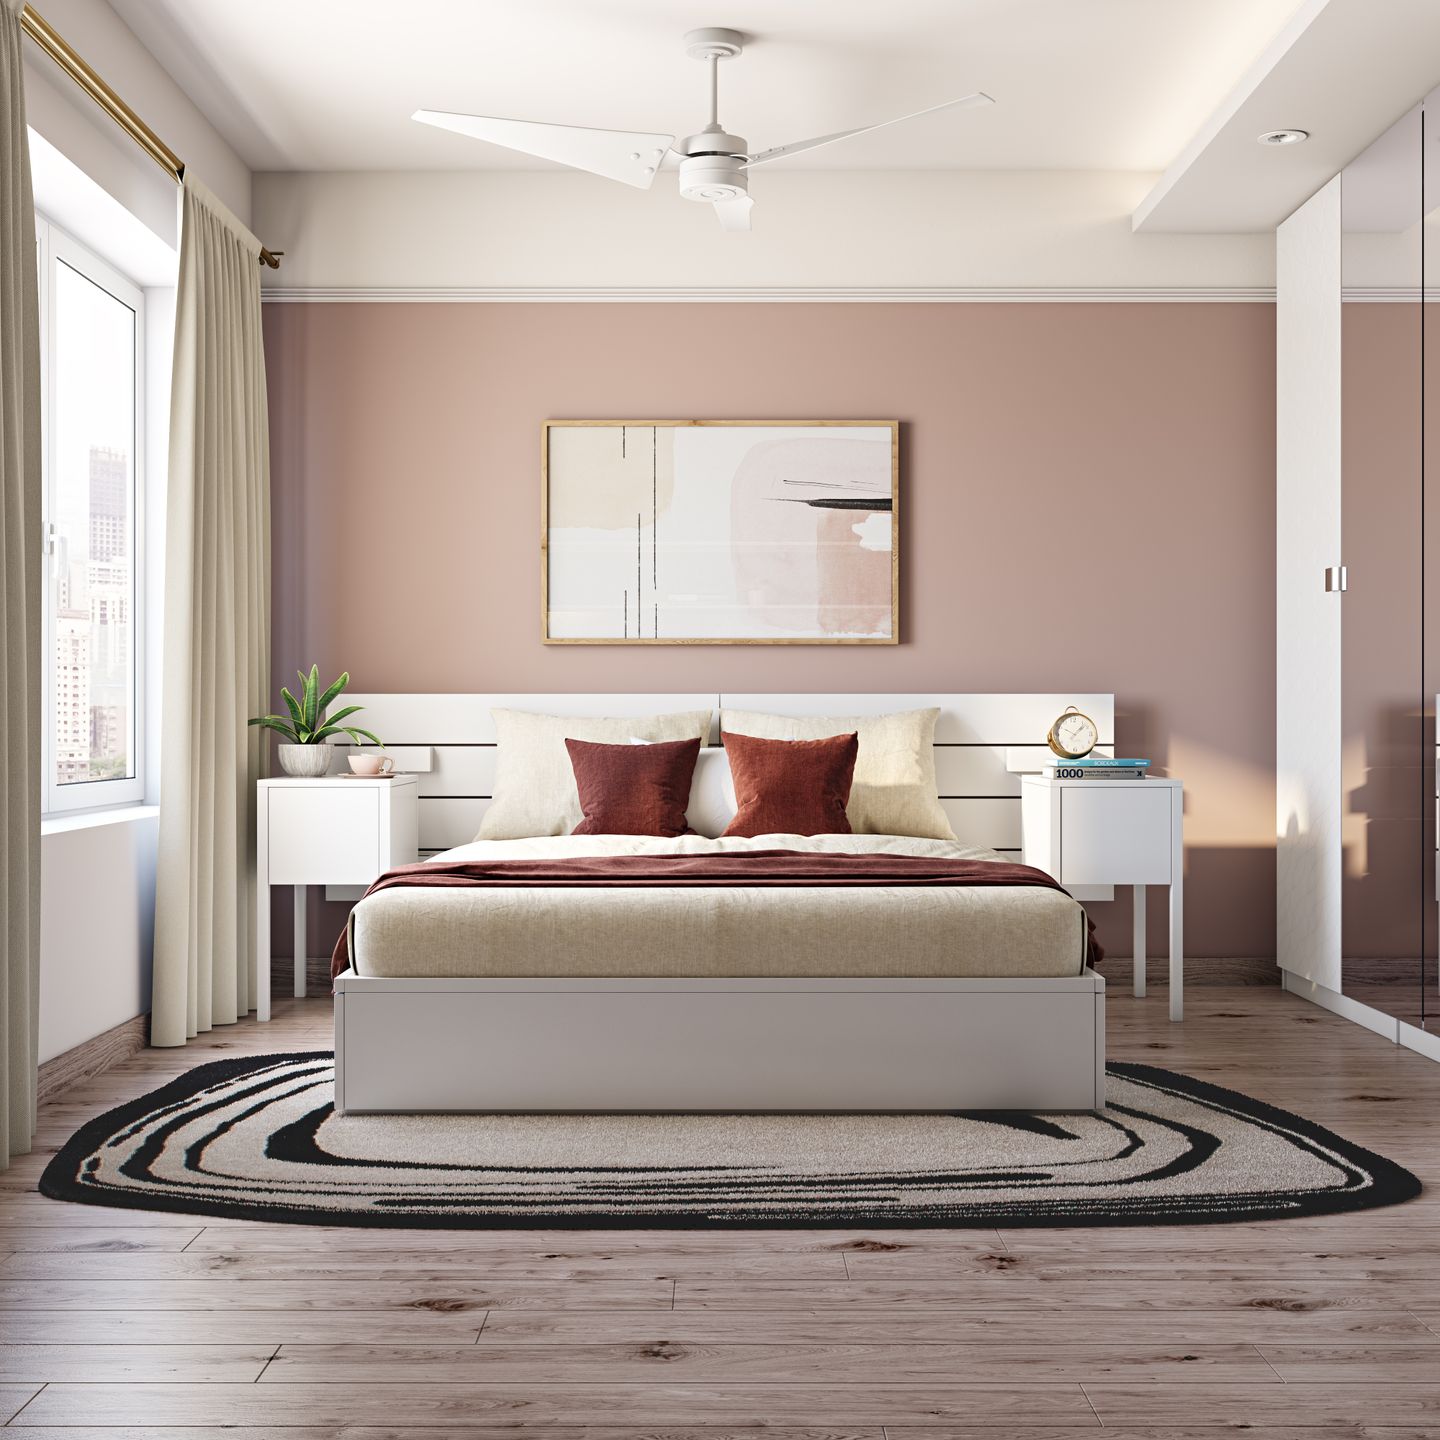 Warm Pink Master Bedroom With Minimalist Design - Livspace